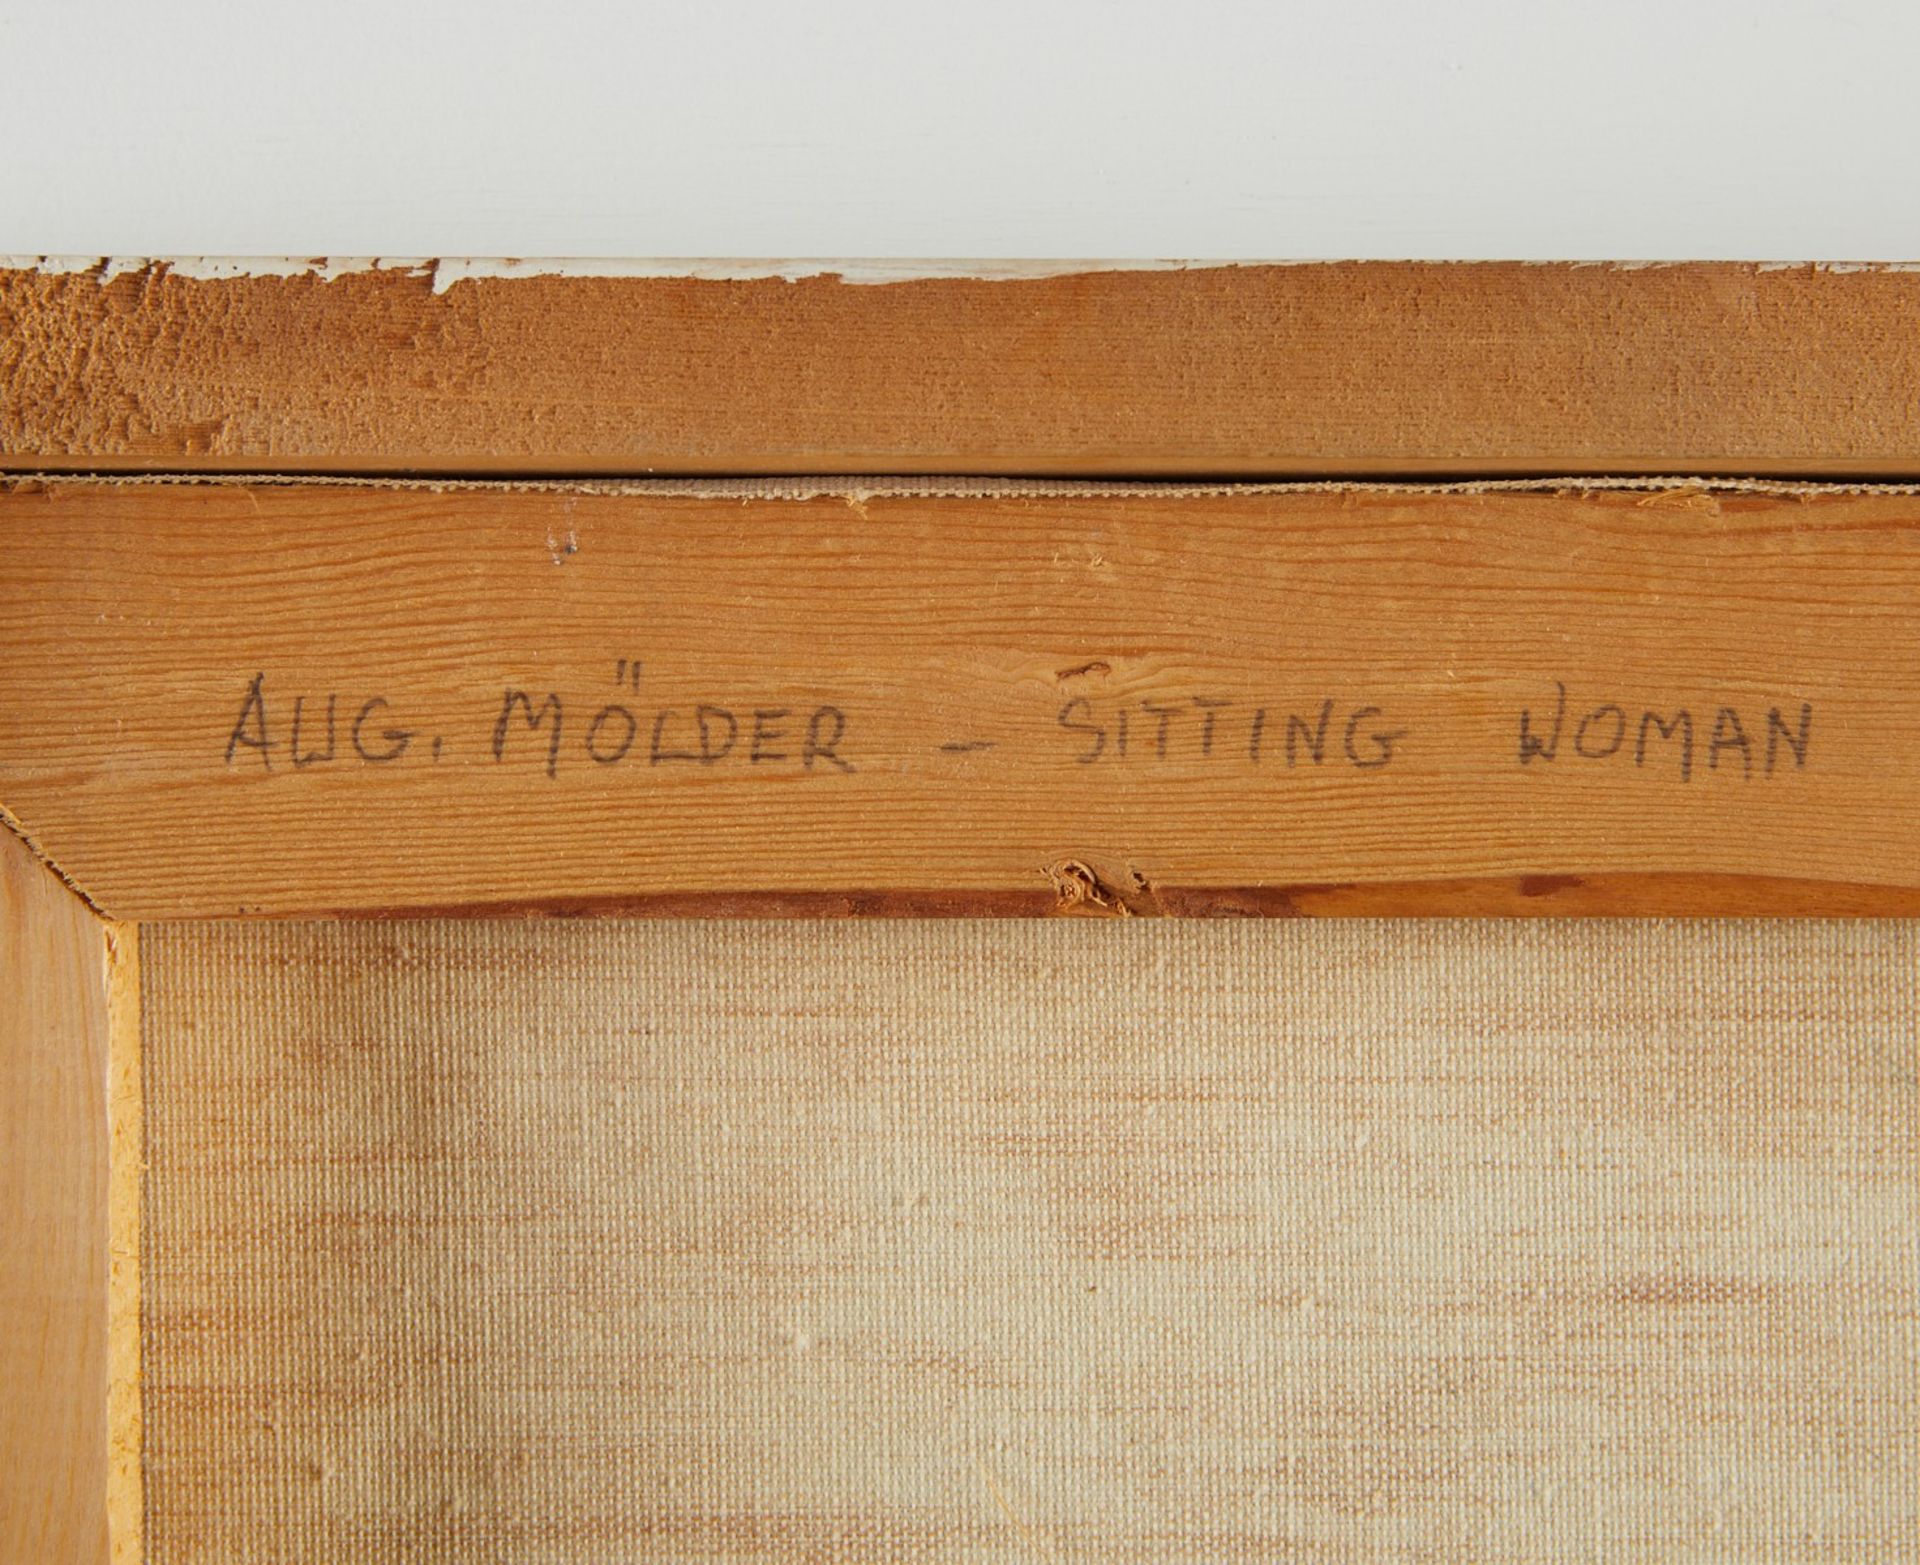 August Molder "Sitting Woman" Oil on Canvas - Bild 5 aus 5